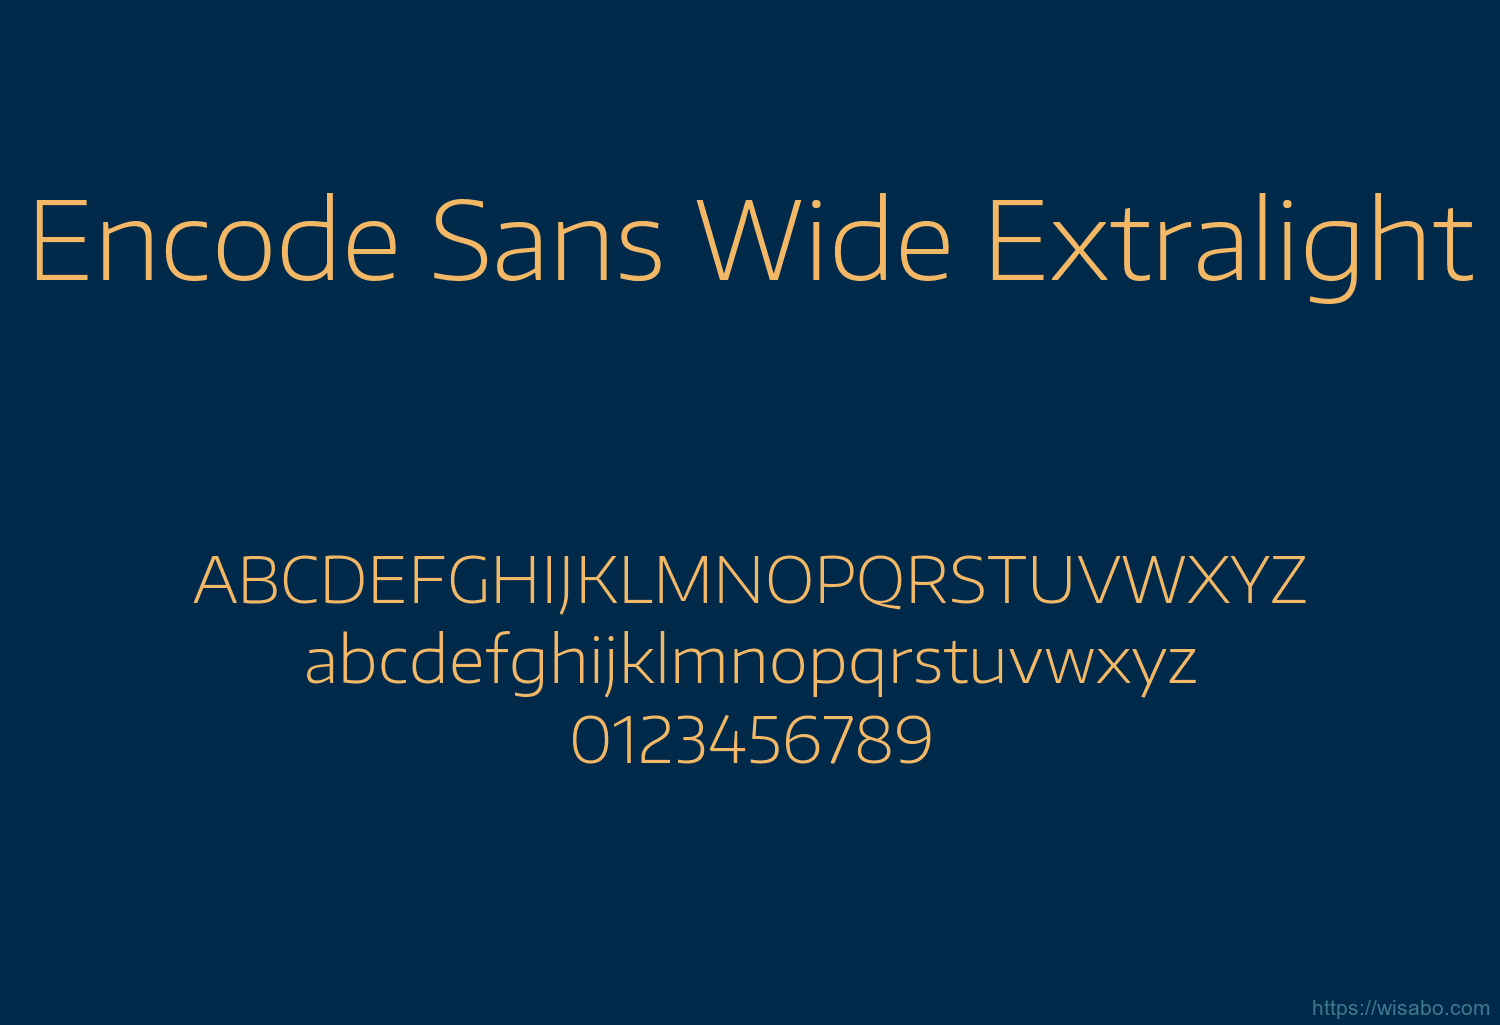 Encode Sans Wide Extralight